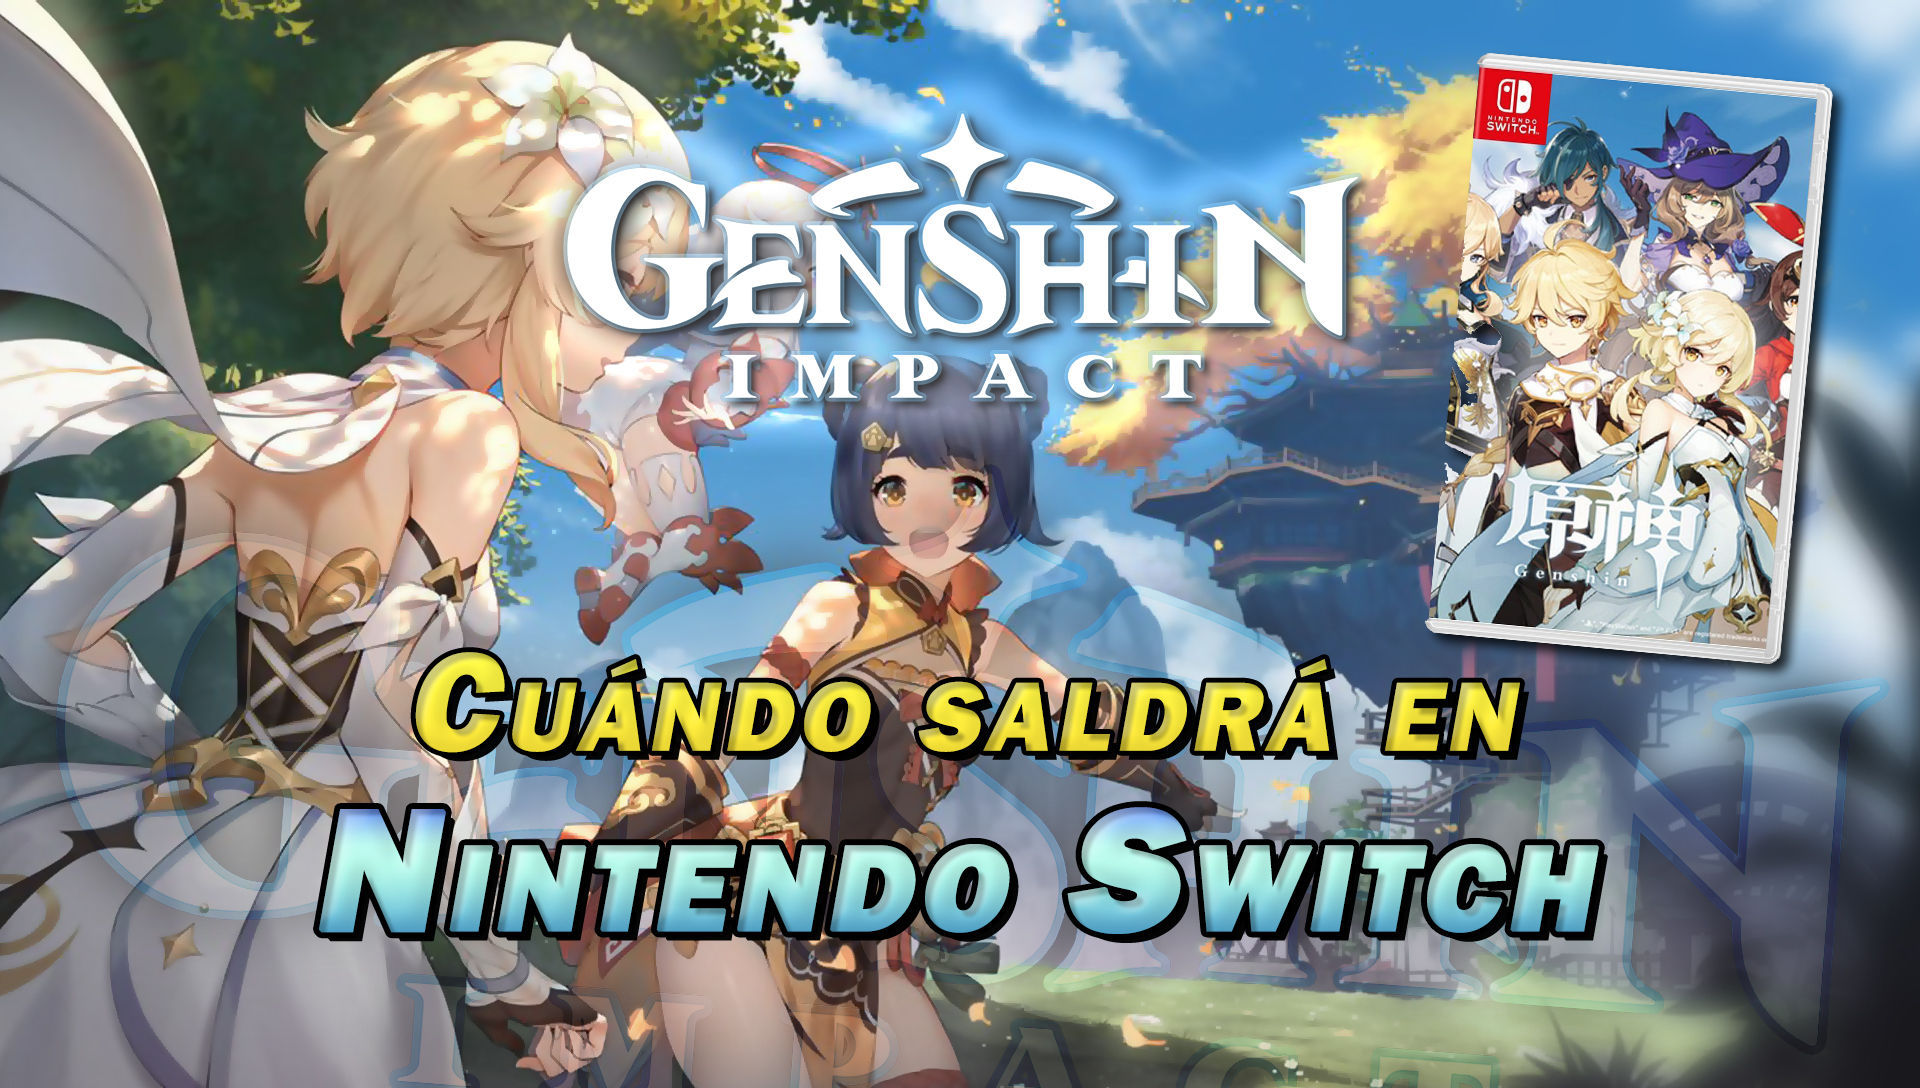 genshin impact on switch